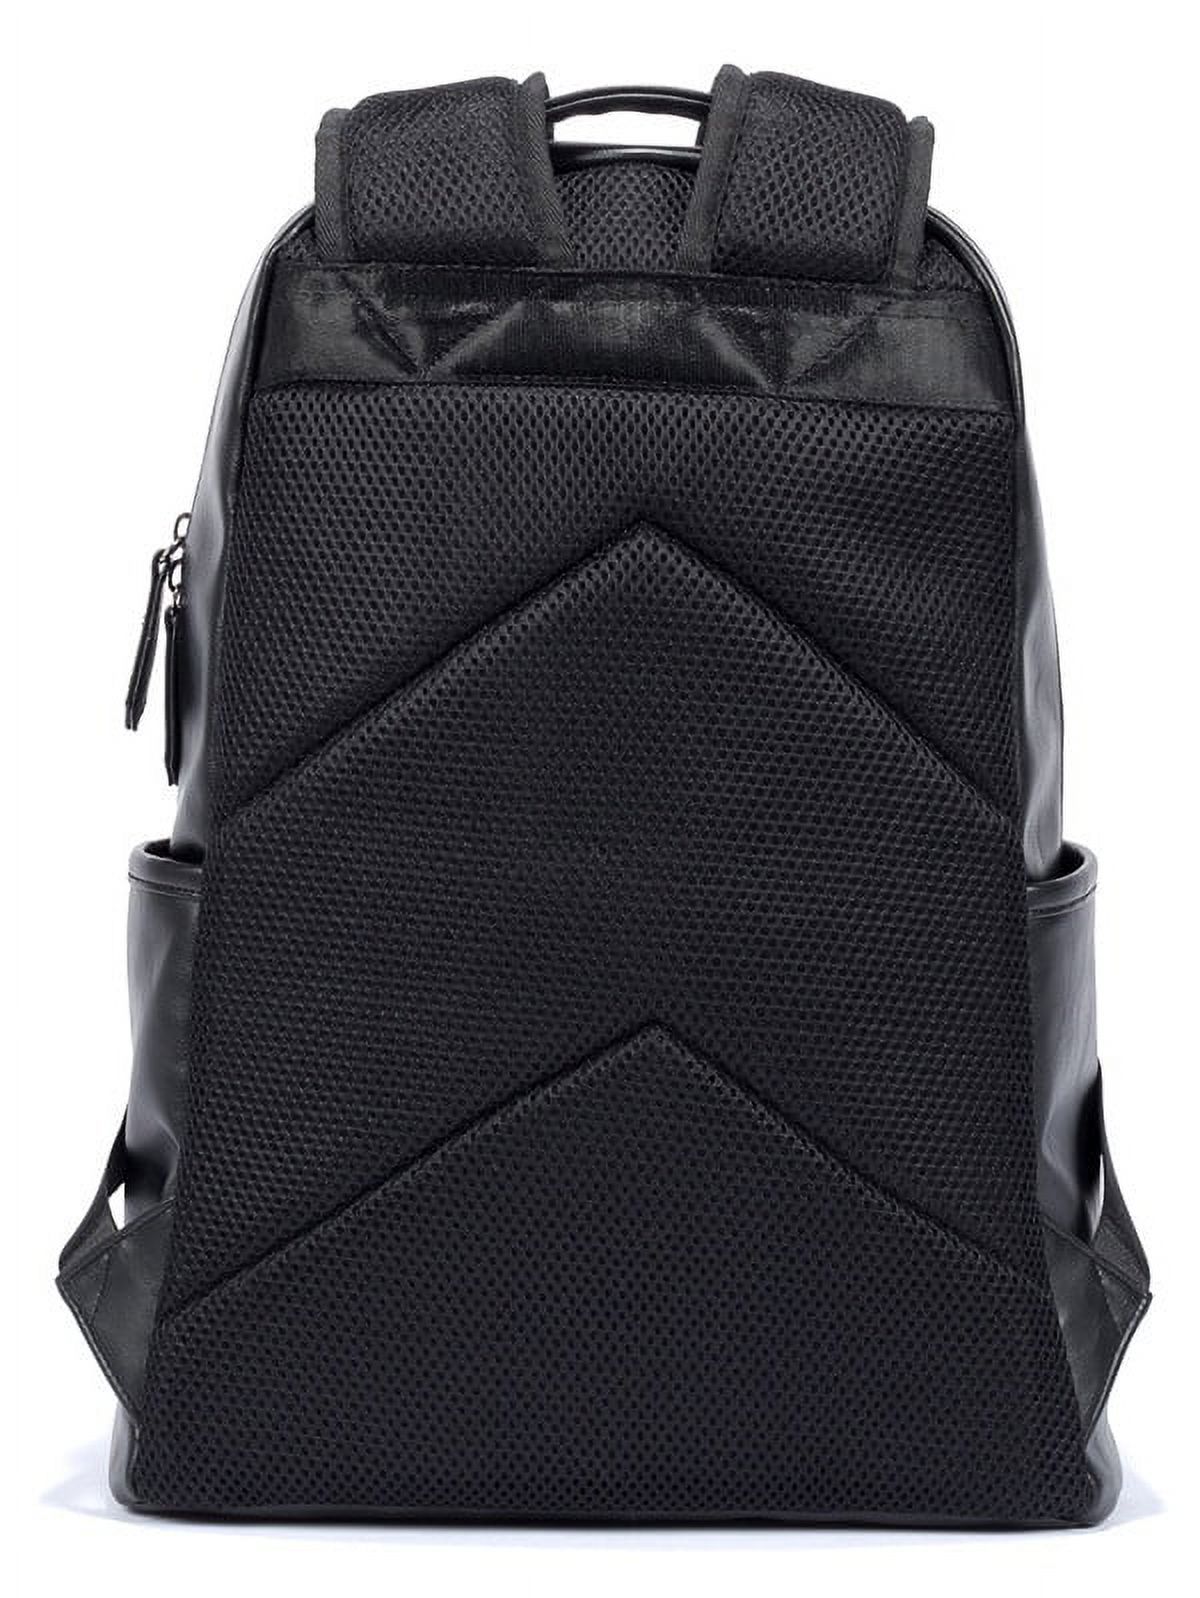 PU Leather Backpack Waterproof Travel Daypack School College Laptop Backpack College Rucksack Bookbag for Men - image 3 of 3